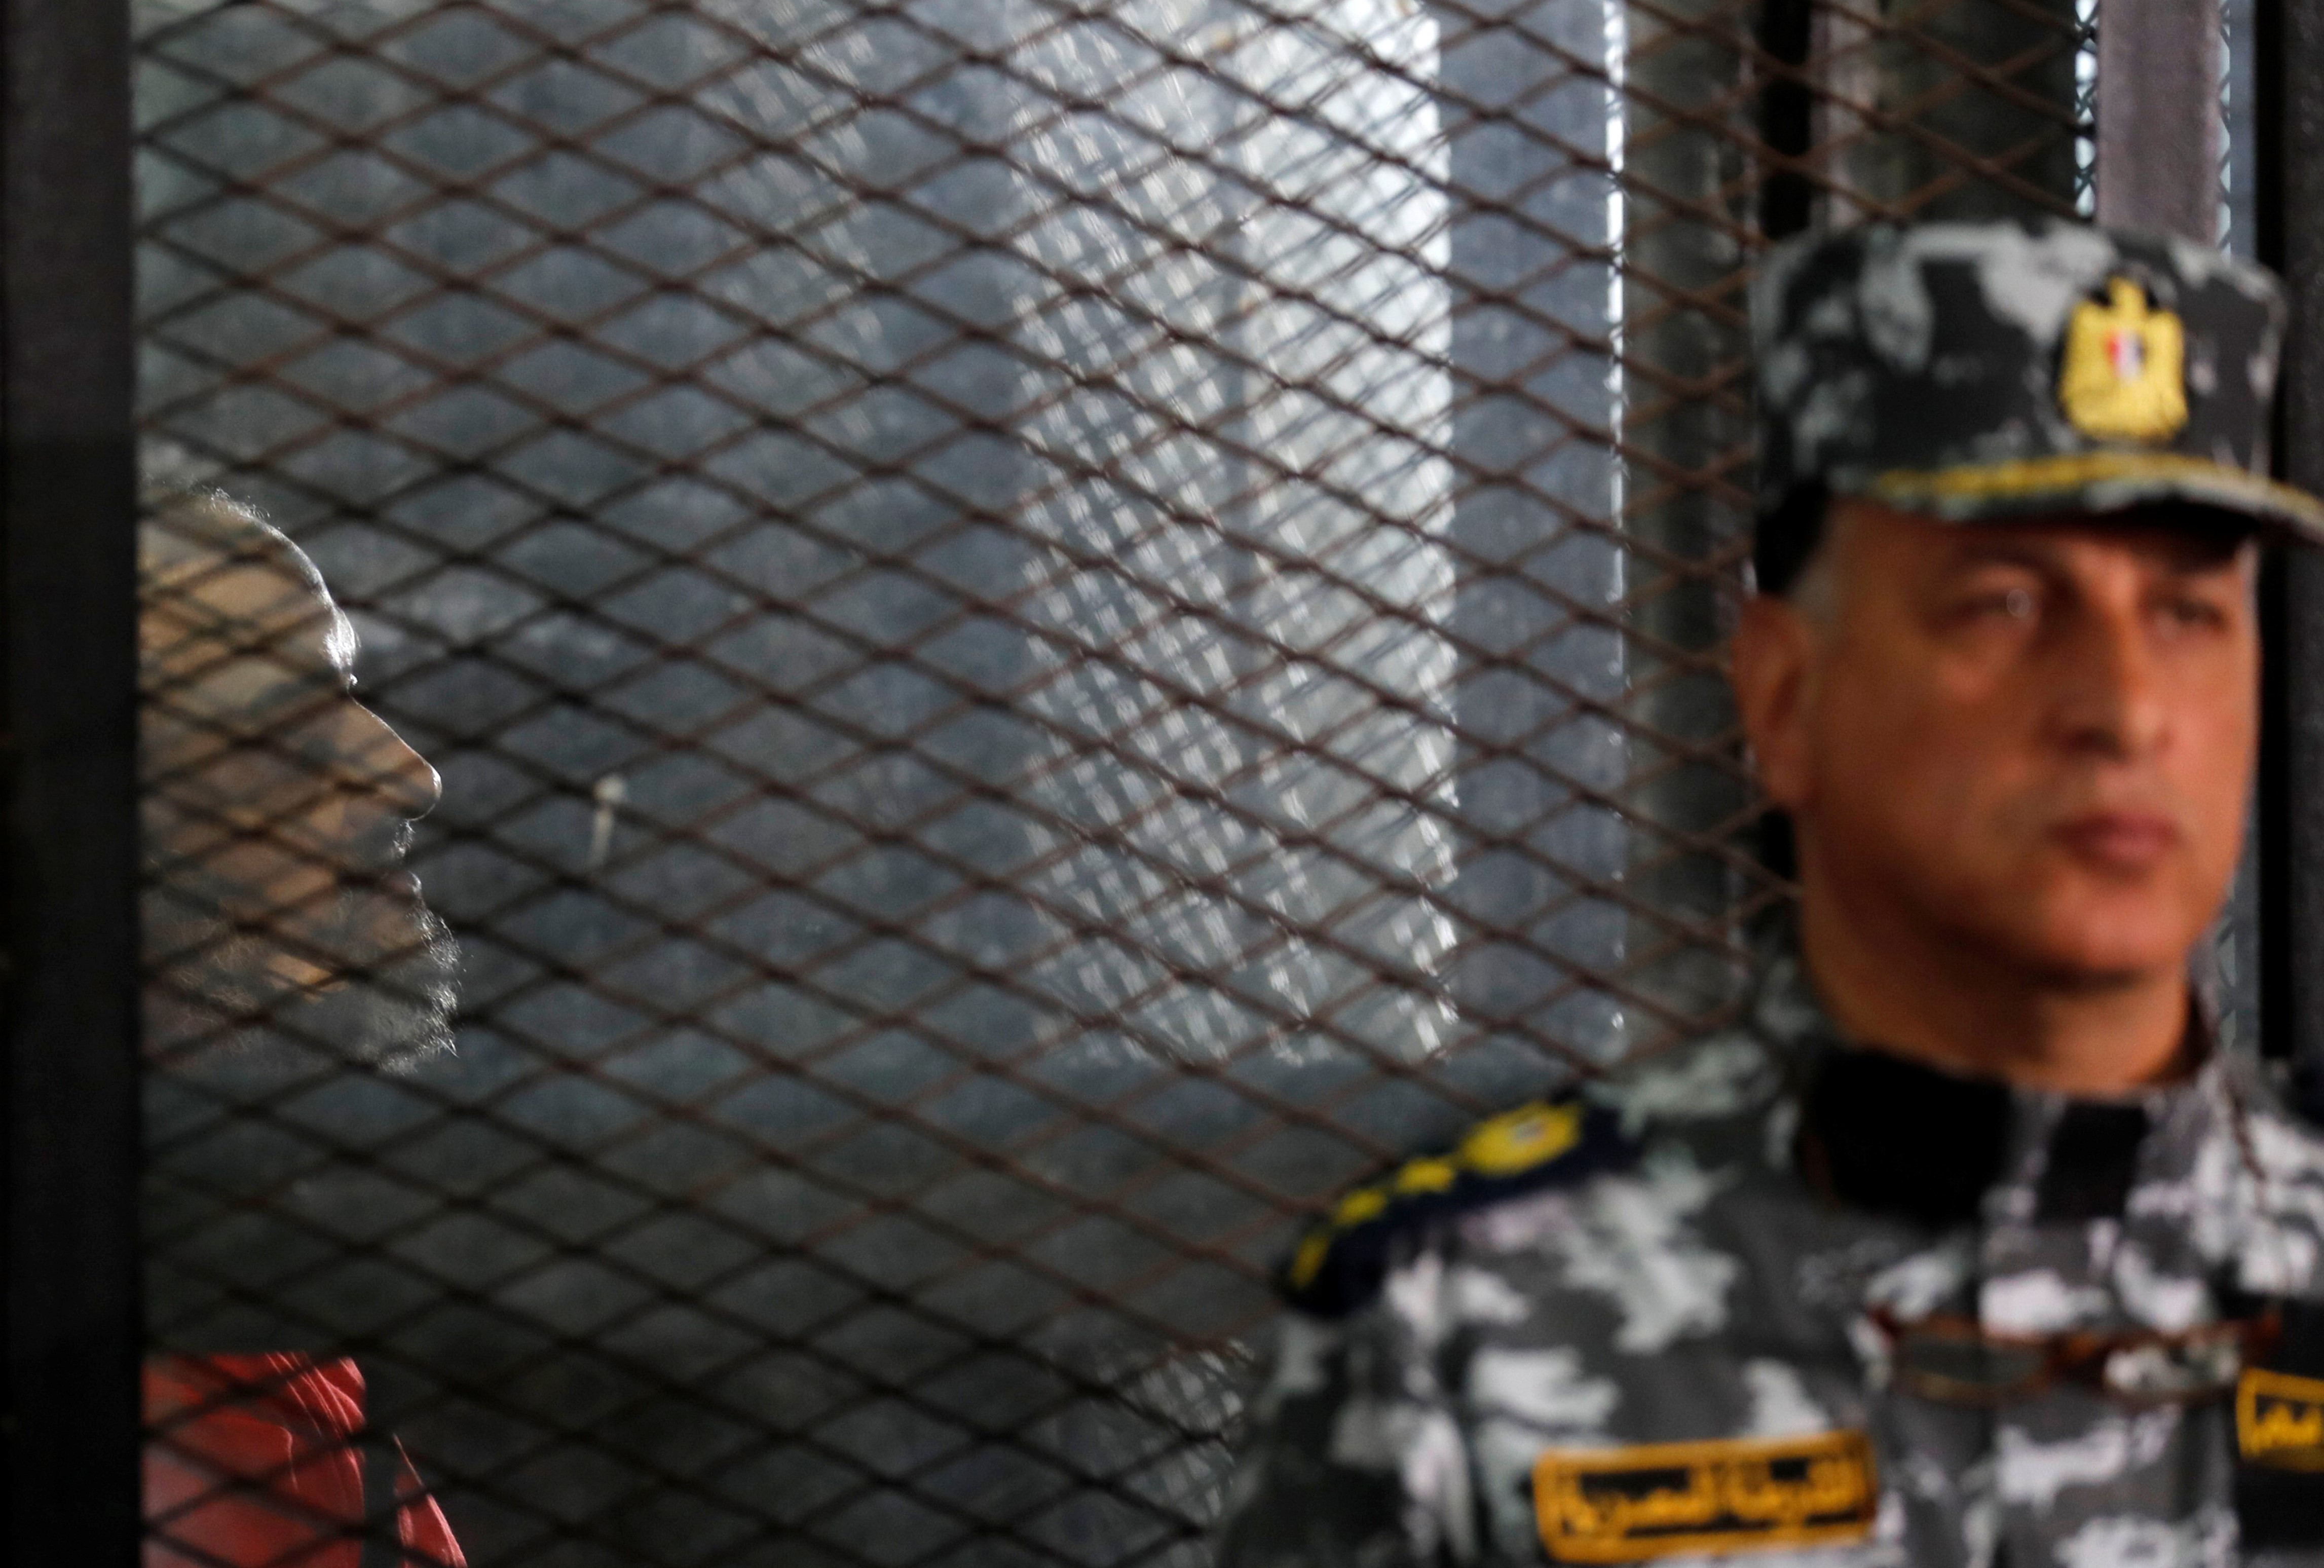  Muslim Brotherhood's senior member Mohamed El-Beltagy is seen behind bars during a court case on 26 December, 2018 (Reuters)